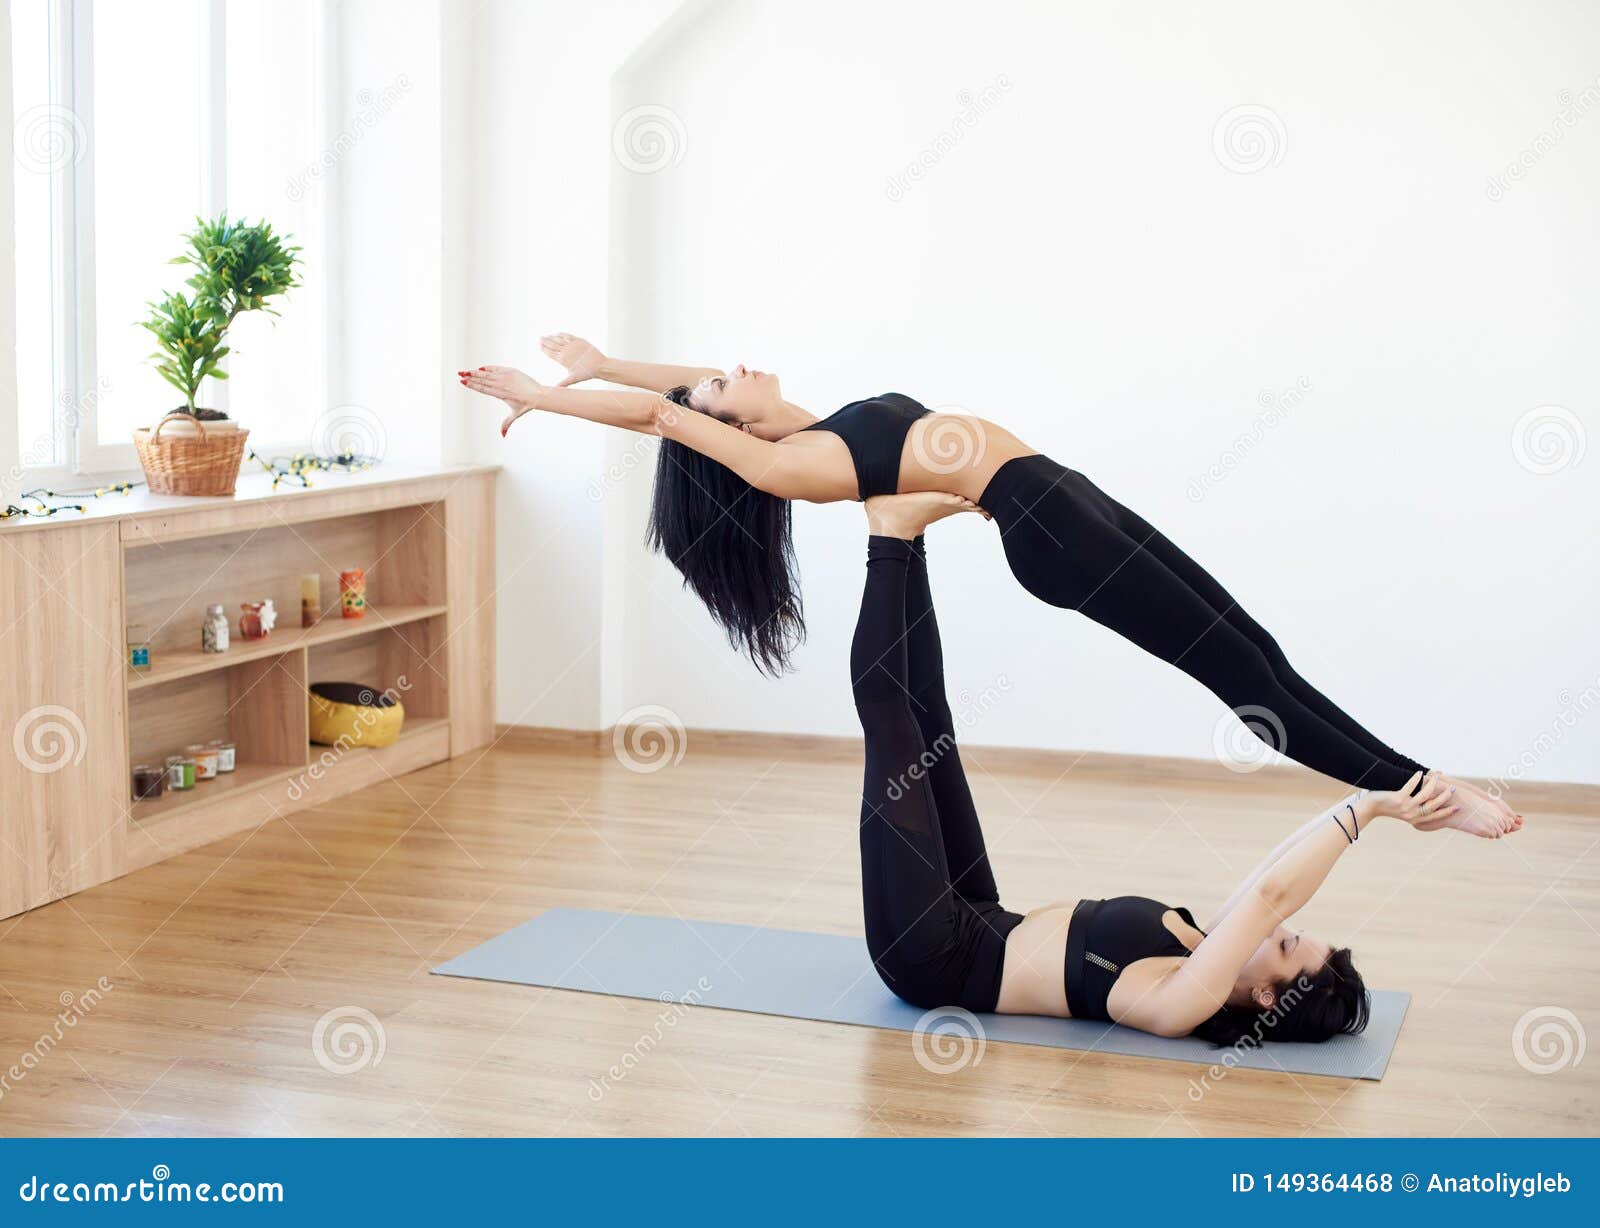 sugar cane pose, advanced yoga pose | Yoga poses advanced, Yoga challenge  poses, Beautiful yoga poses